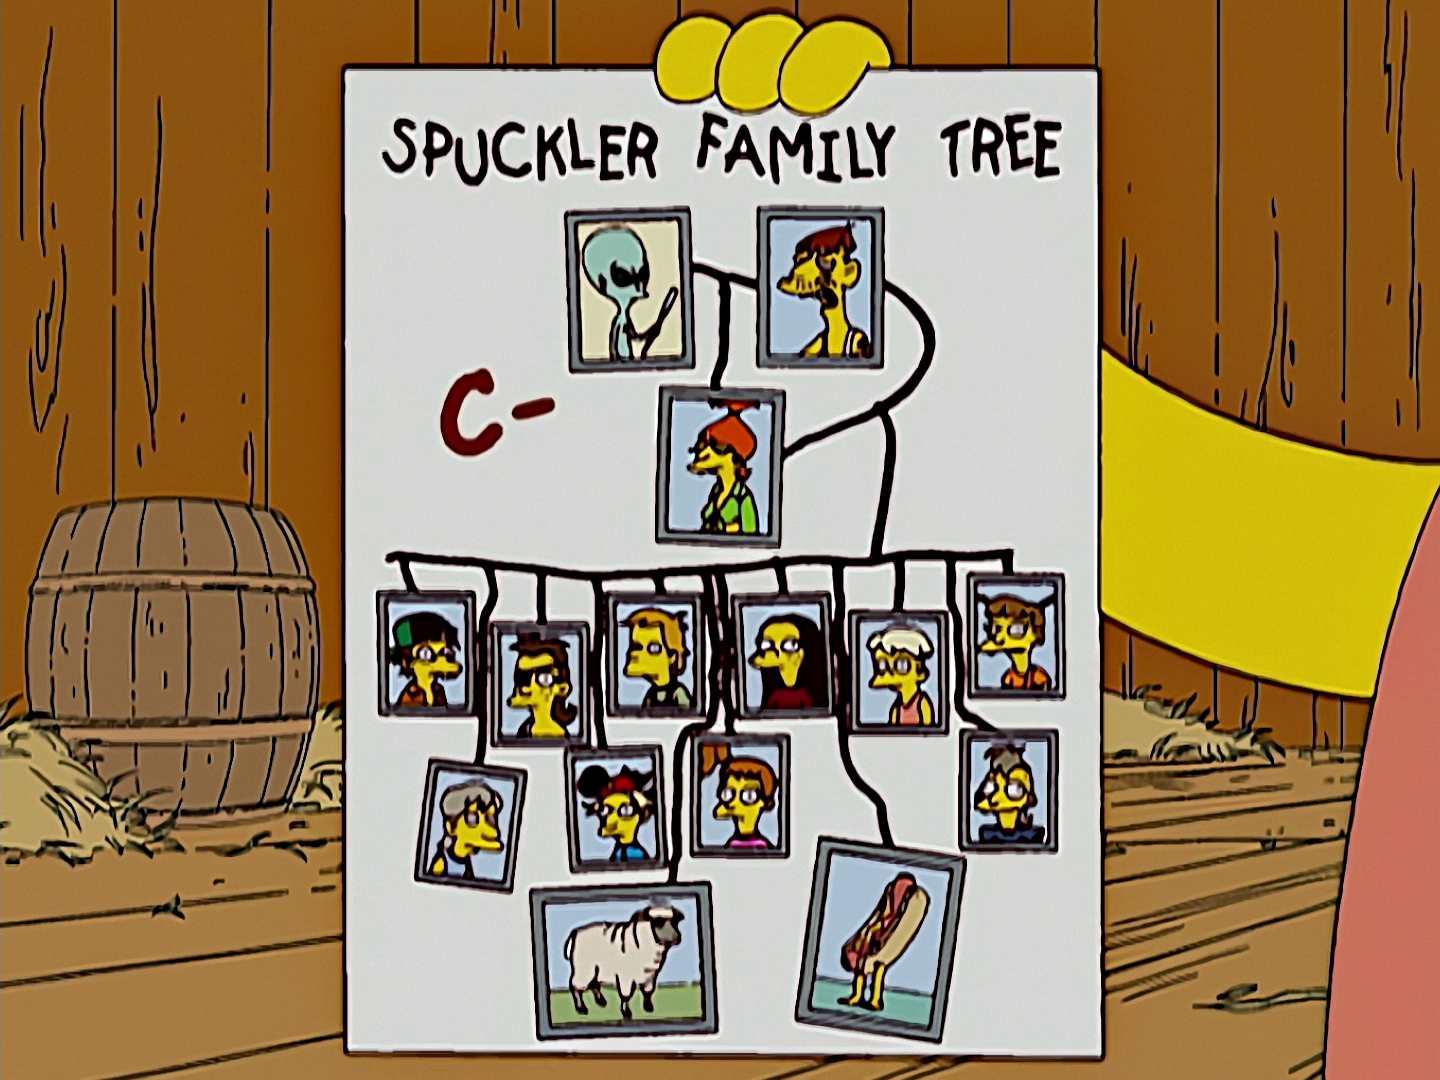 Spuckler_family_tree.png